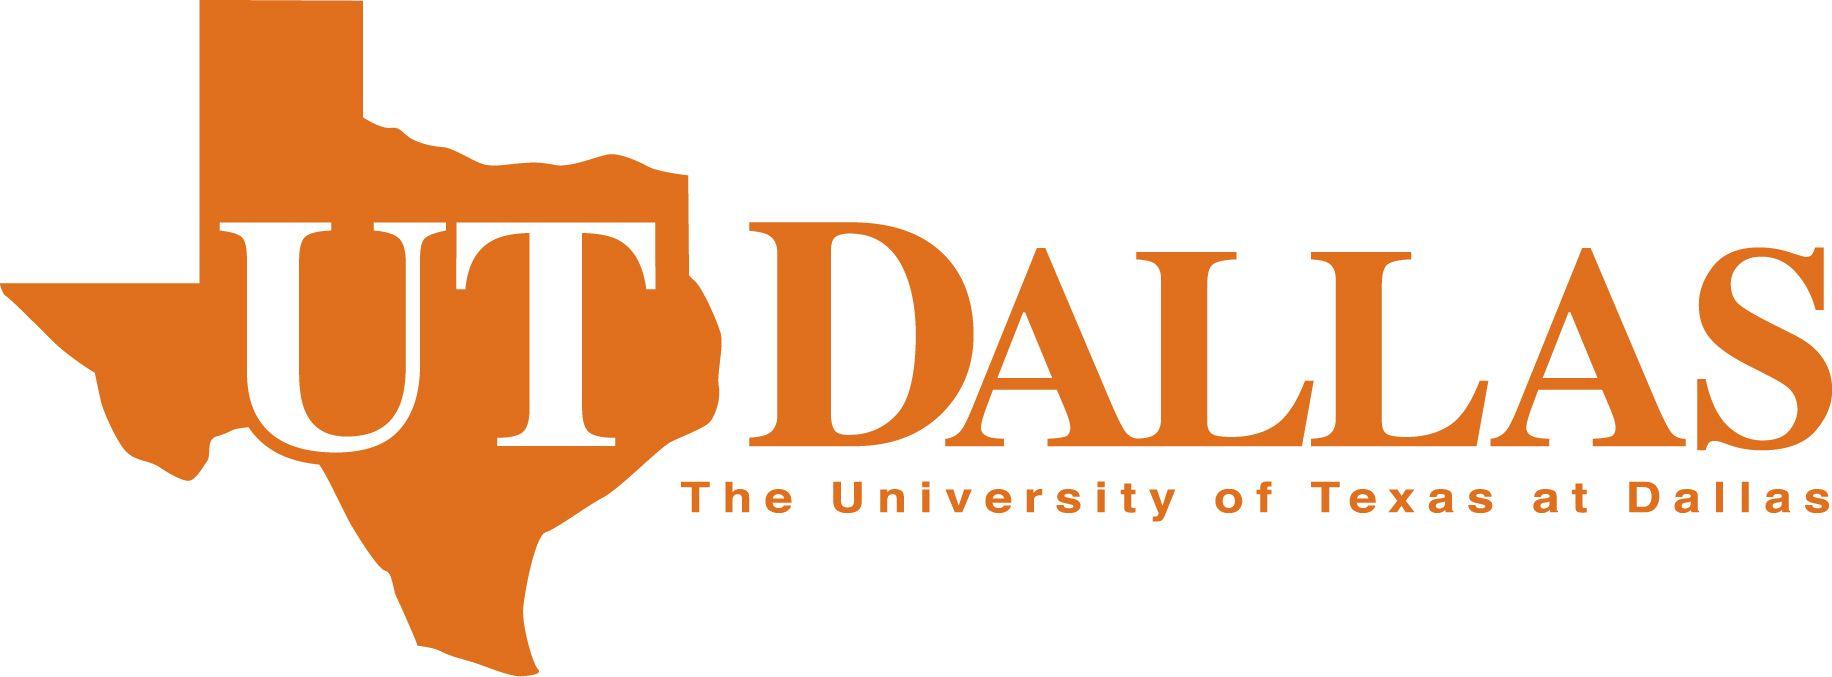 Utd Comets Logo - GET University of Texas